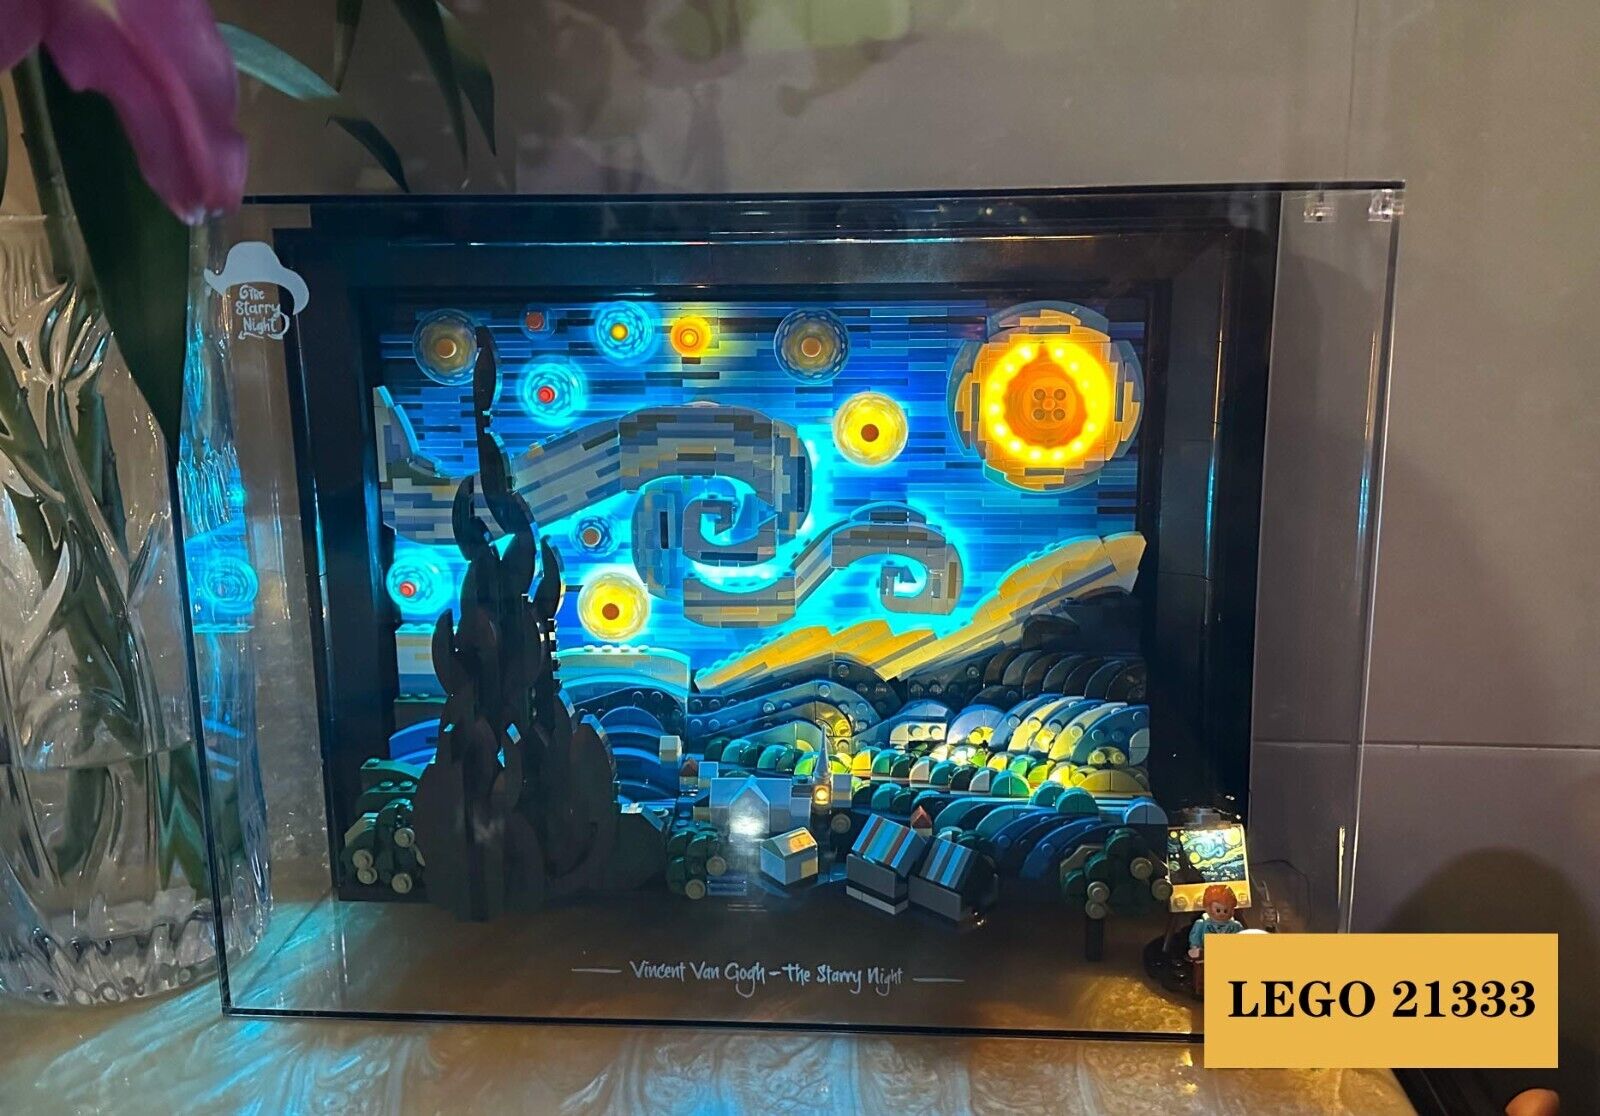 Display case & light kit For LEGO 21333 Vincent van Gogh The Starry Night Lights